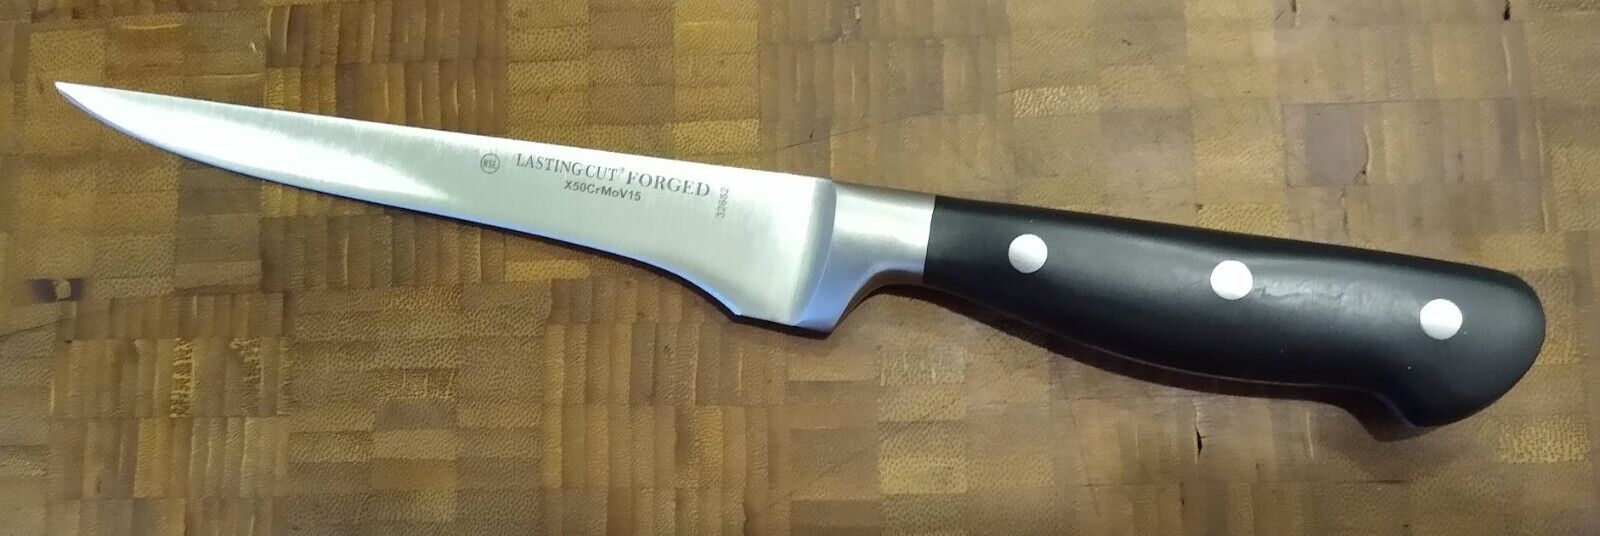 6" Boning Knife~lasting Cut~fully Forged Blade~x50crmov15 German Steel Nsf Rated